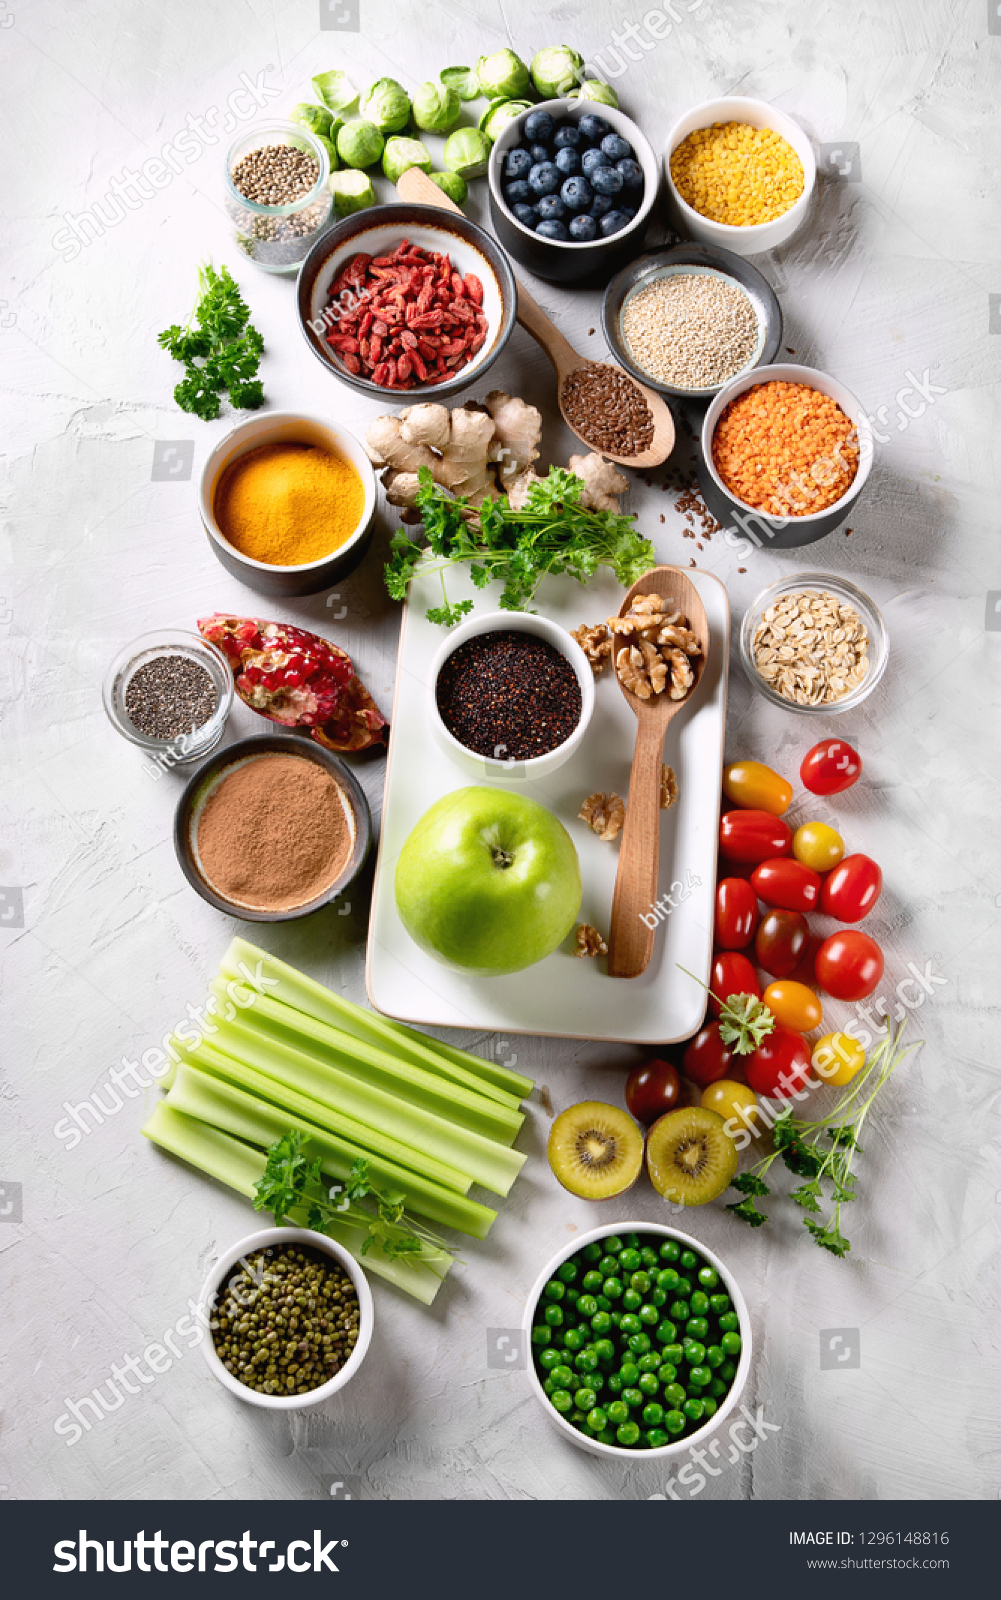 Vegetables, fruit, grain, superfoods for vegan and vegetarian eating. Clean eating. Detox, dieting food concept #1296148816